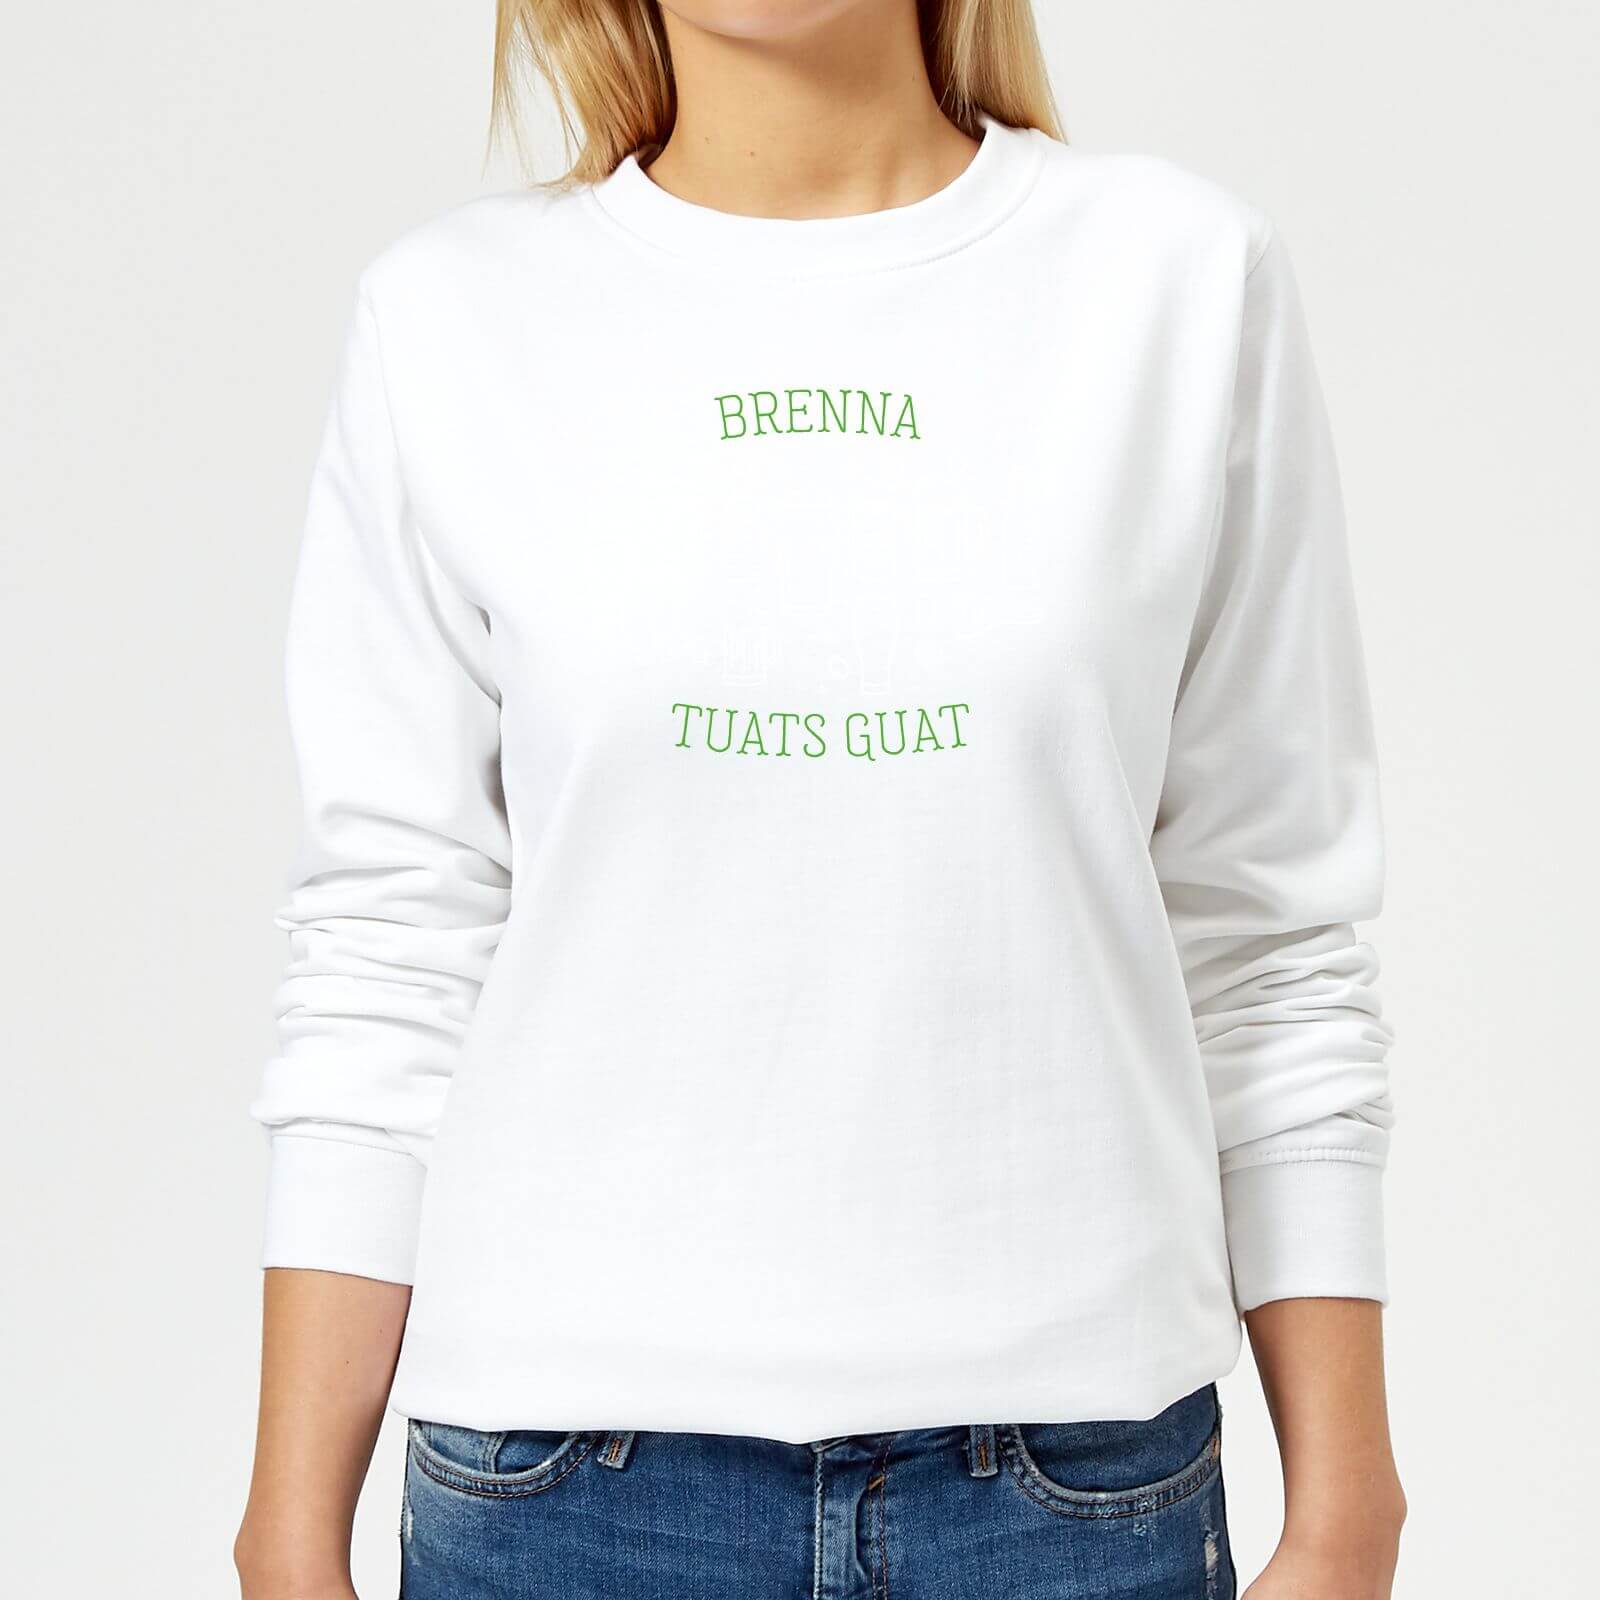 Oktoberfest Brenna Tuats Guat! Women's Sweatshirt - White - XS - White